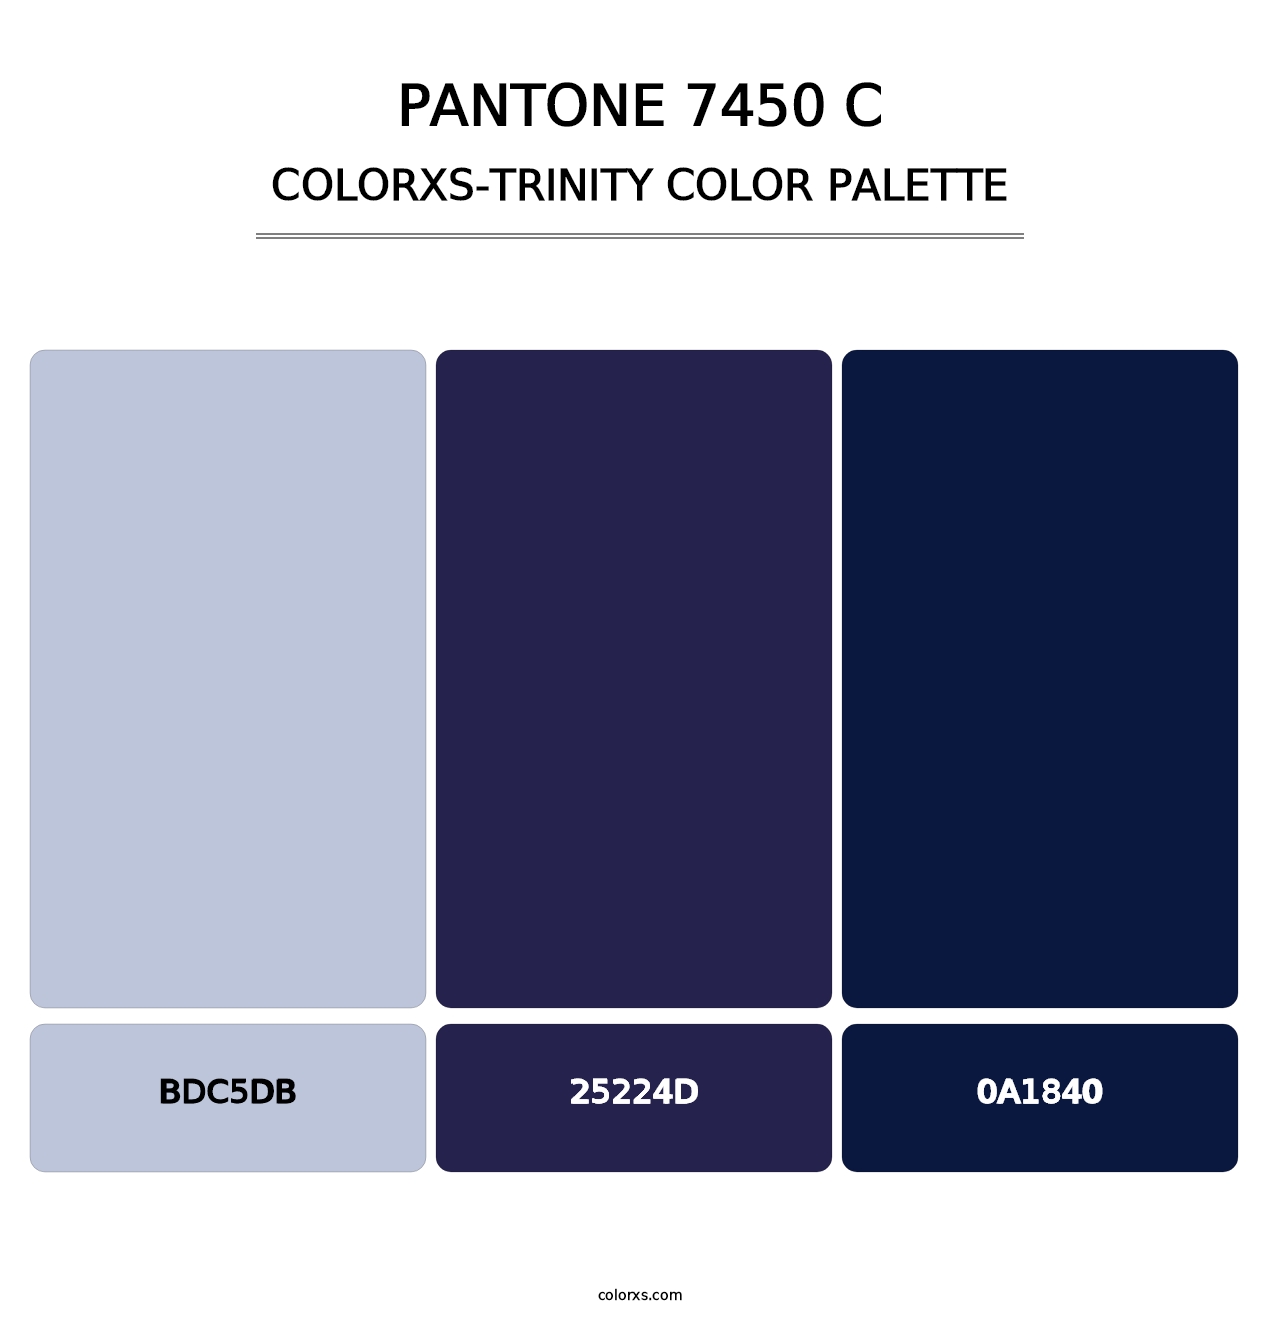 PANTONE 7450 C - Colorxs Trinity Palette